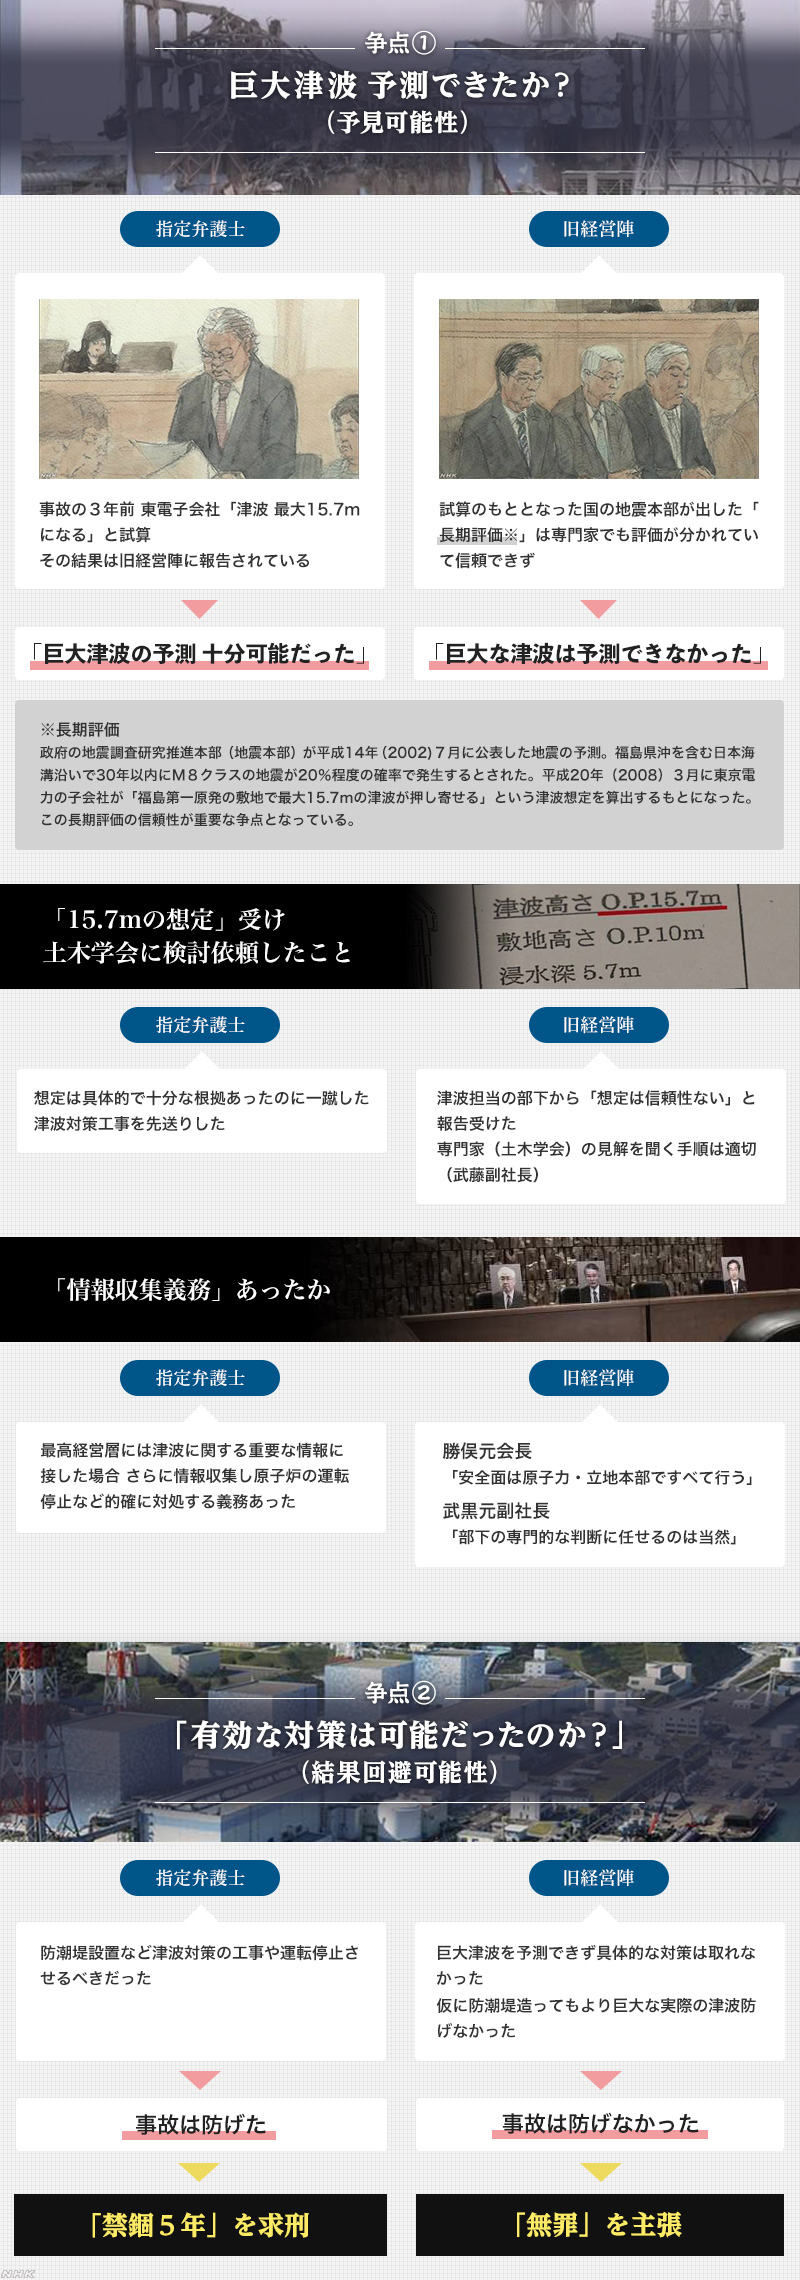 詳報 東電 刑事裁判 原発事故の真相は Nhk News Web